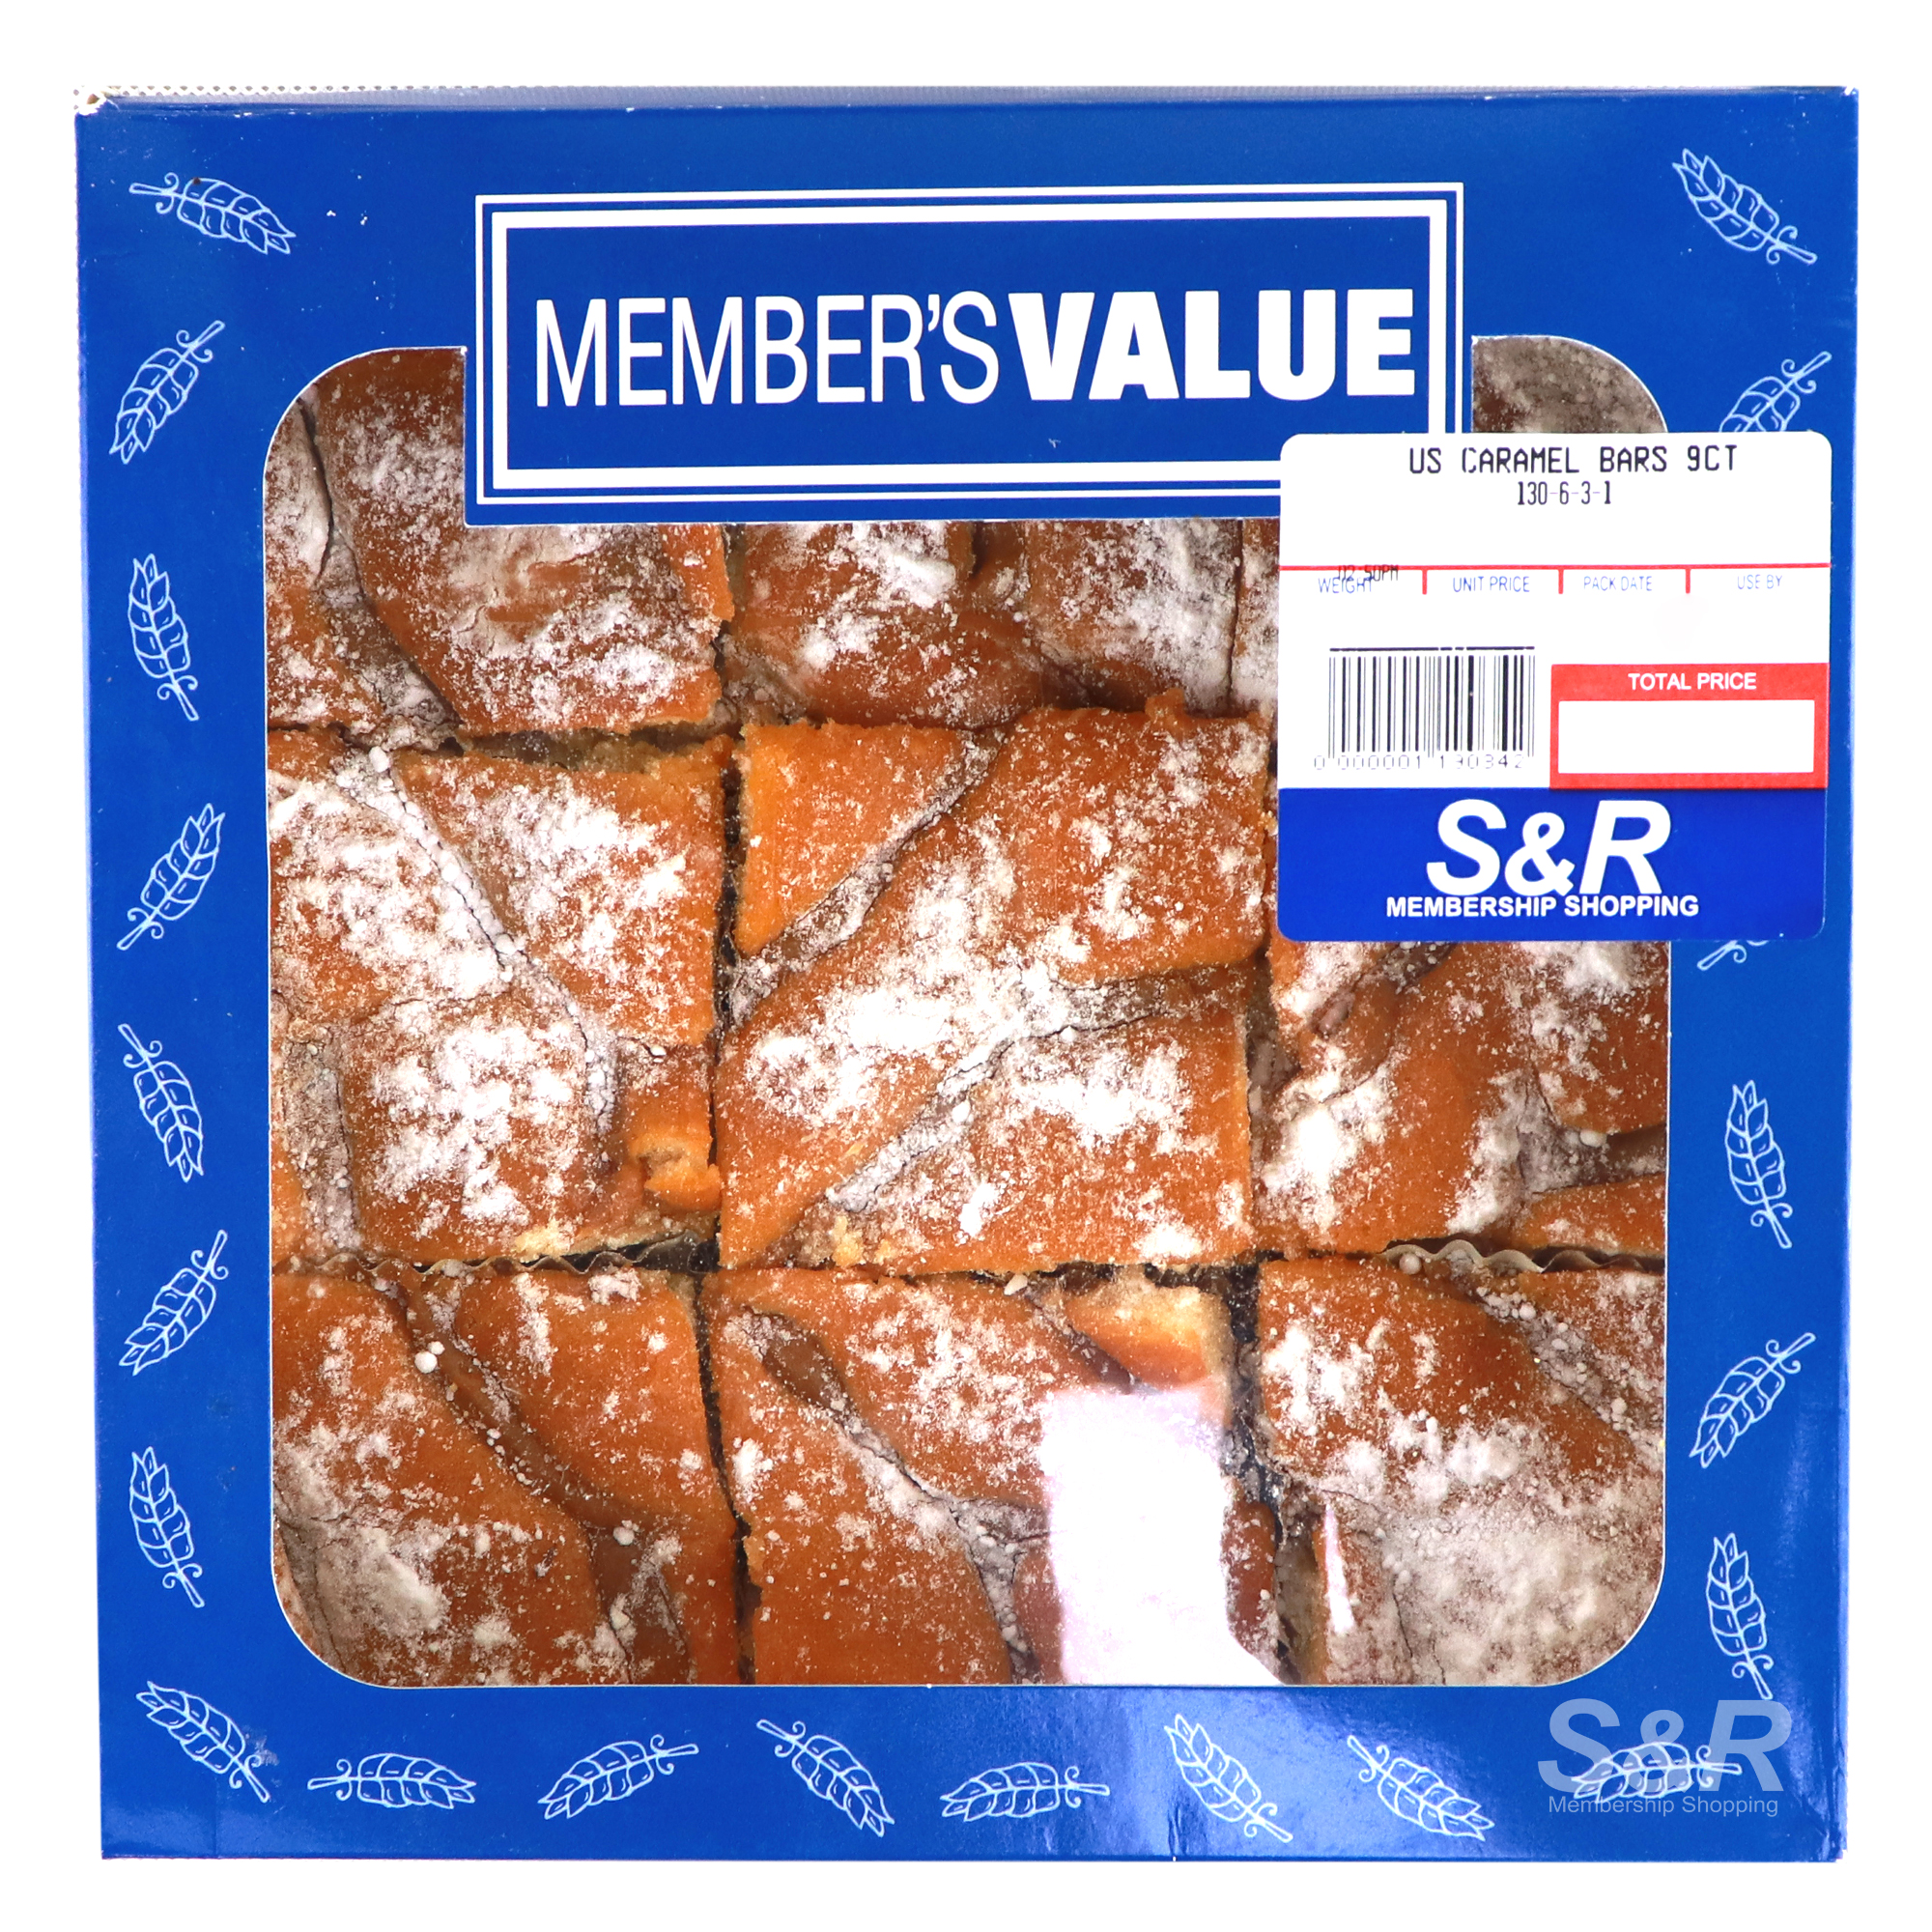 Member's Value US Caramel Bar 9 slices